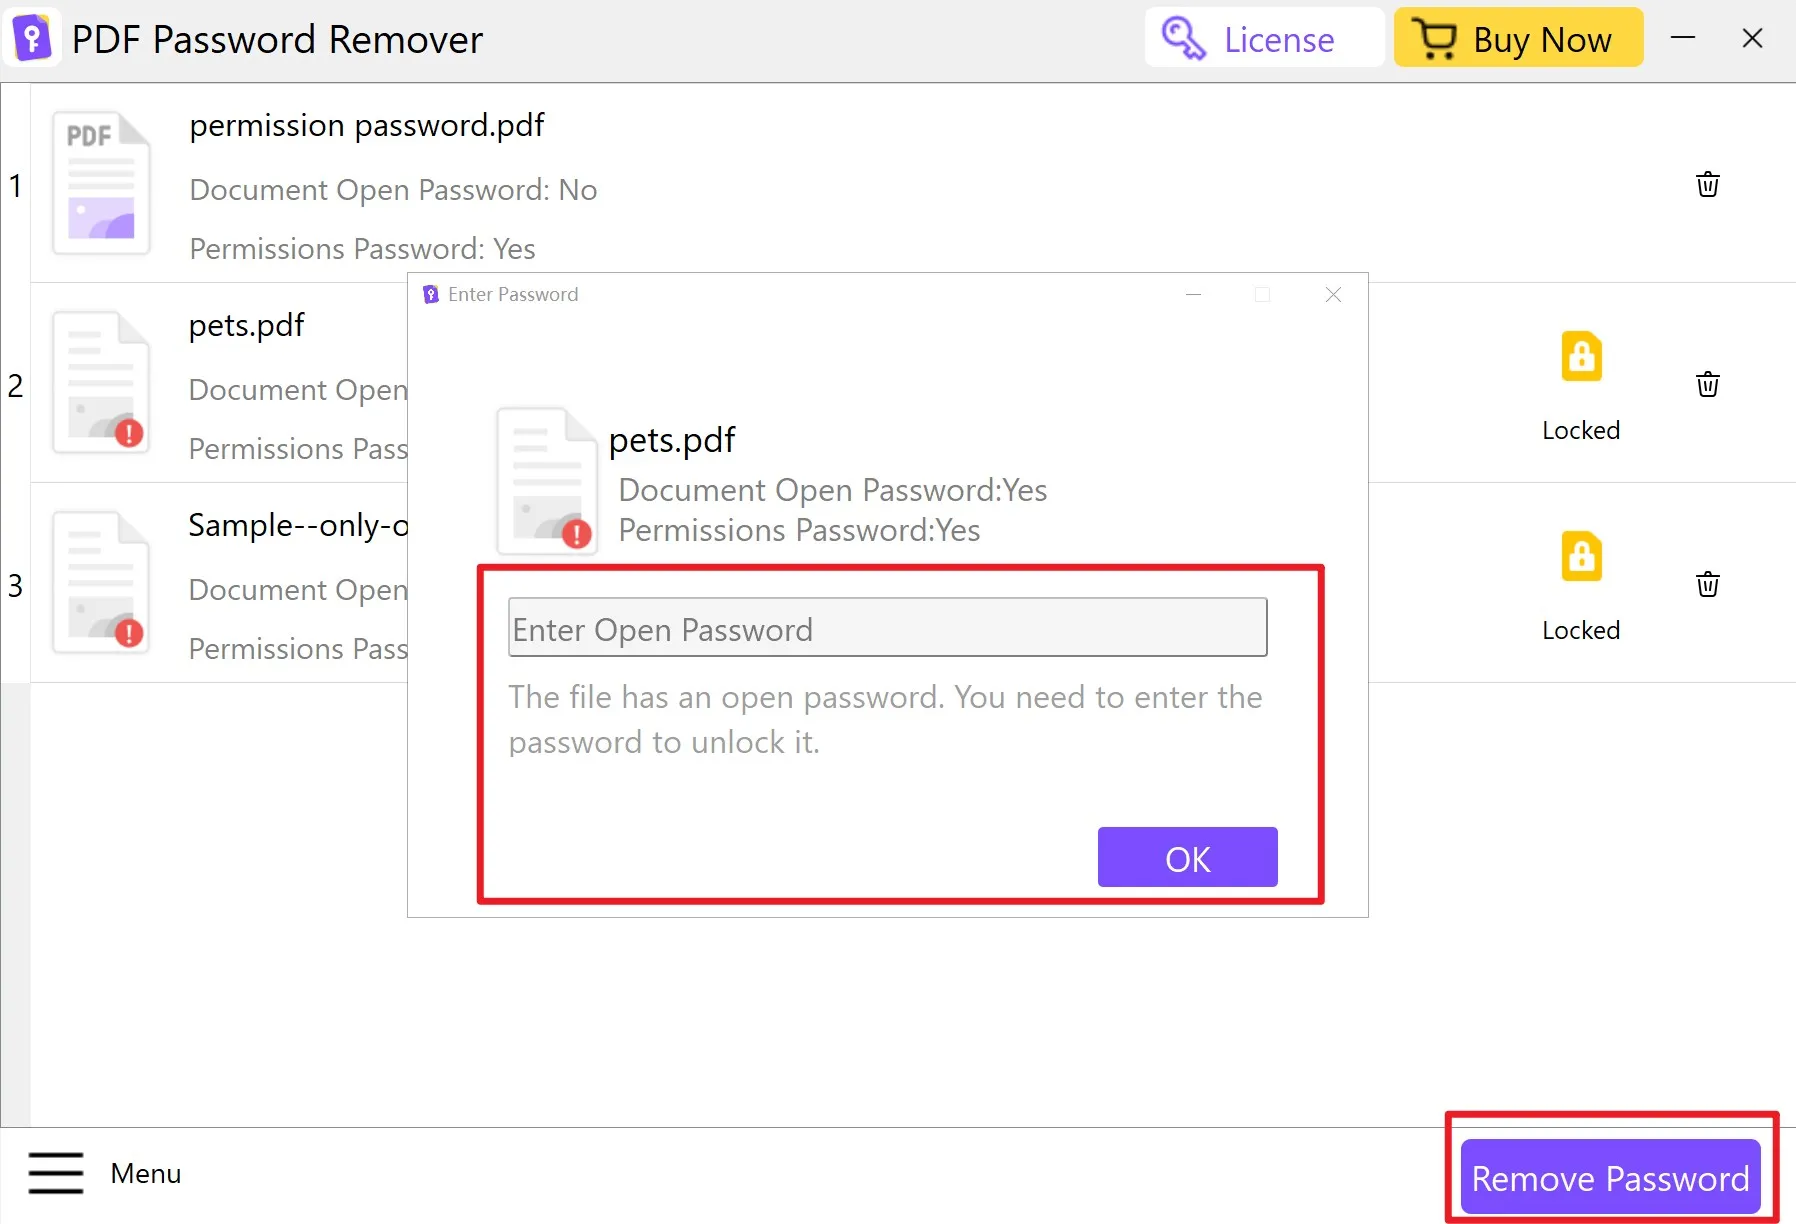 Berechtigungspasswort entfernen mit PDF Password Remover